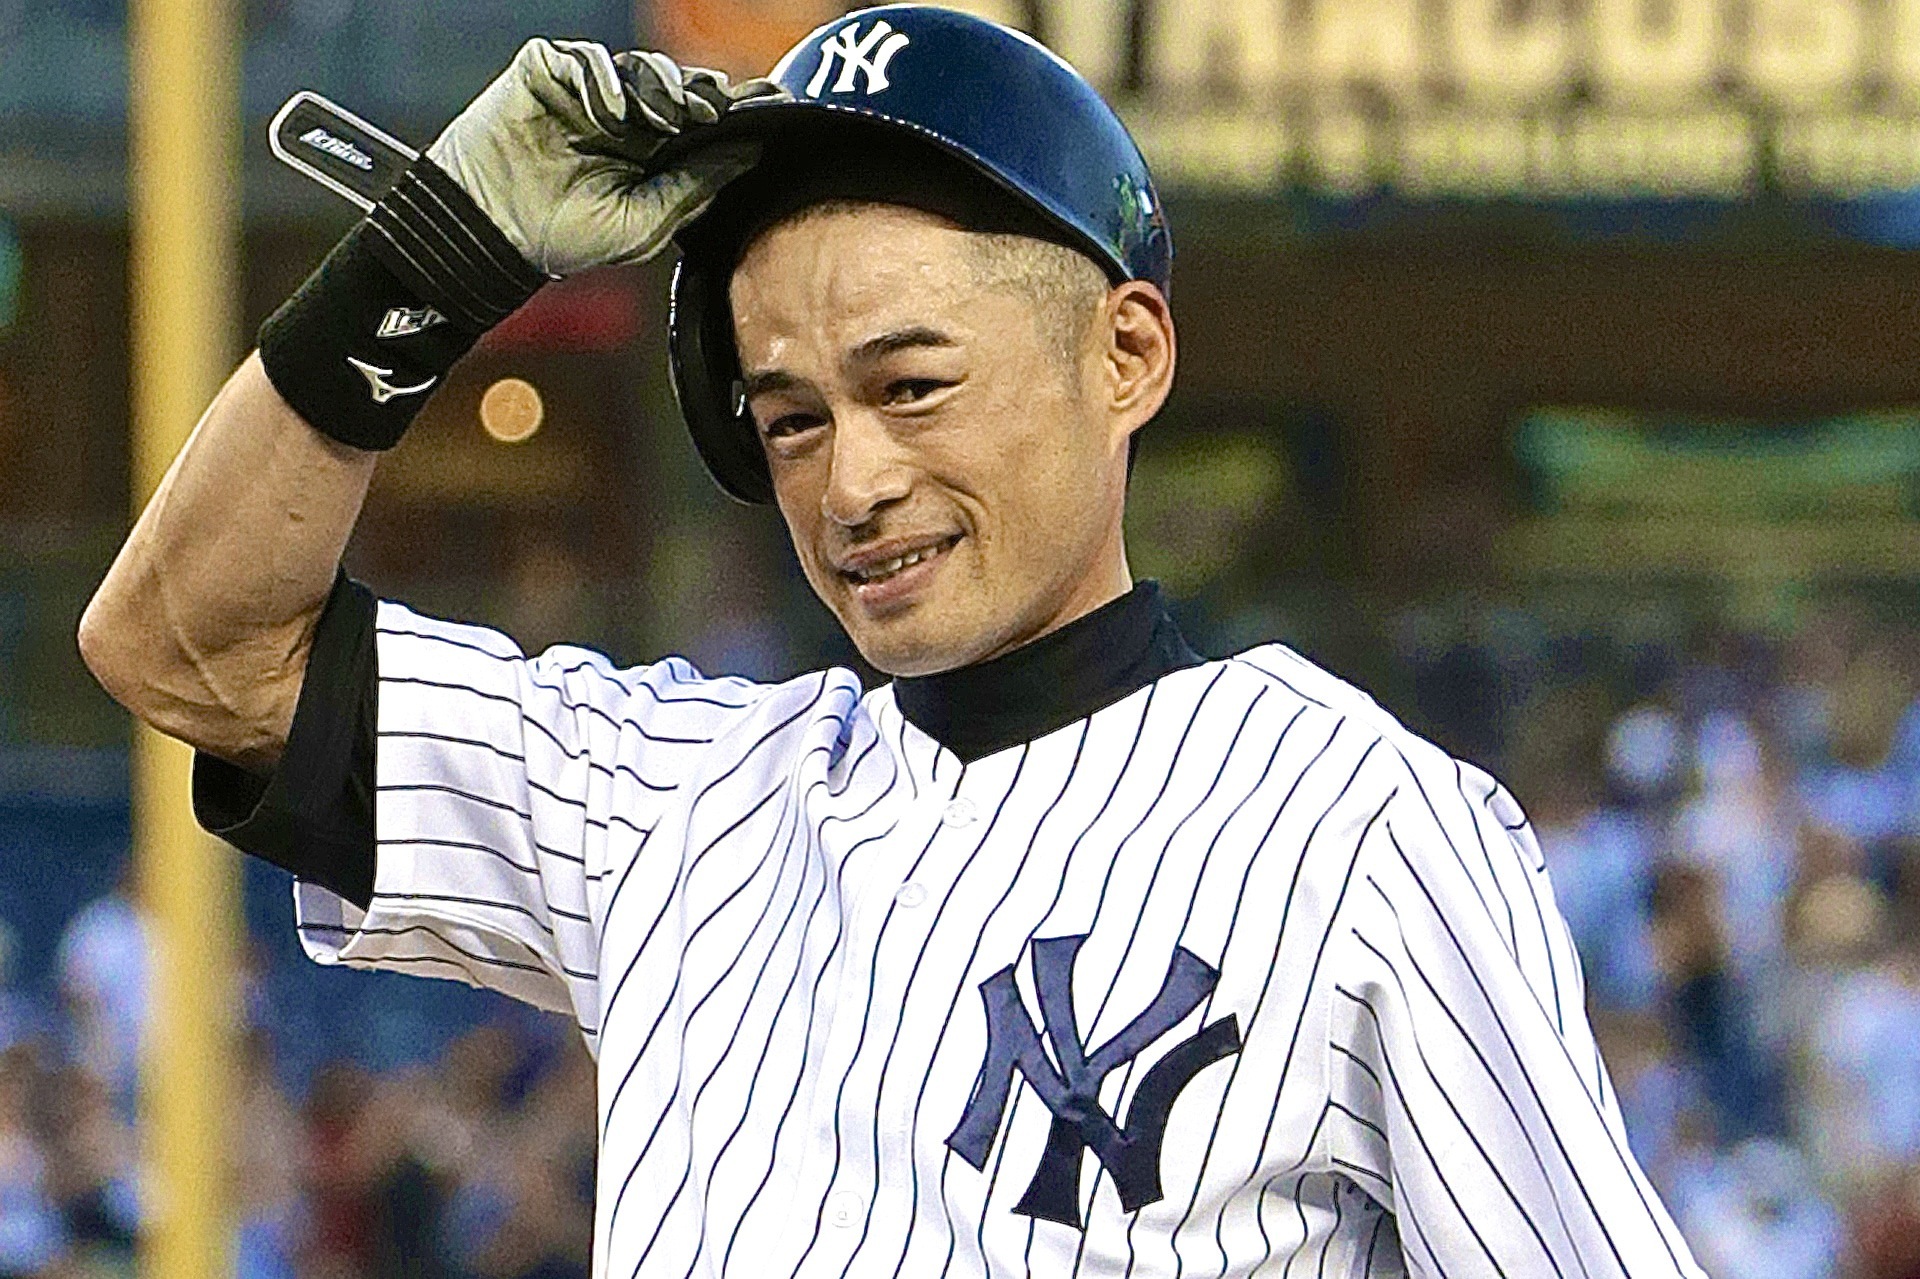 Yankees' Ichiro Suzuki Records 4,000th Hit in Pro Career, News, Scores,  Highlights, Stats, and Rumors